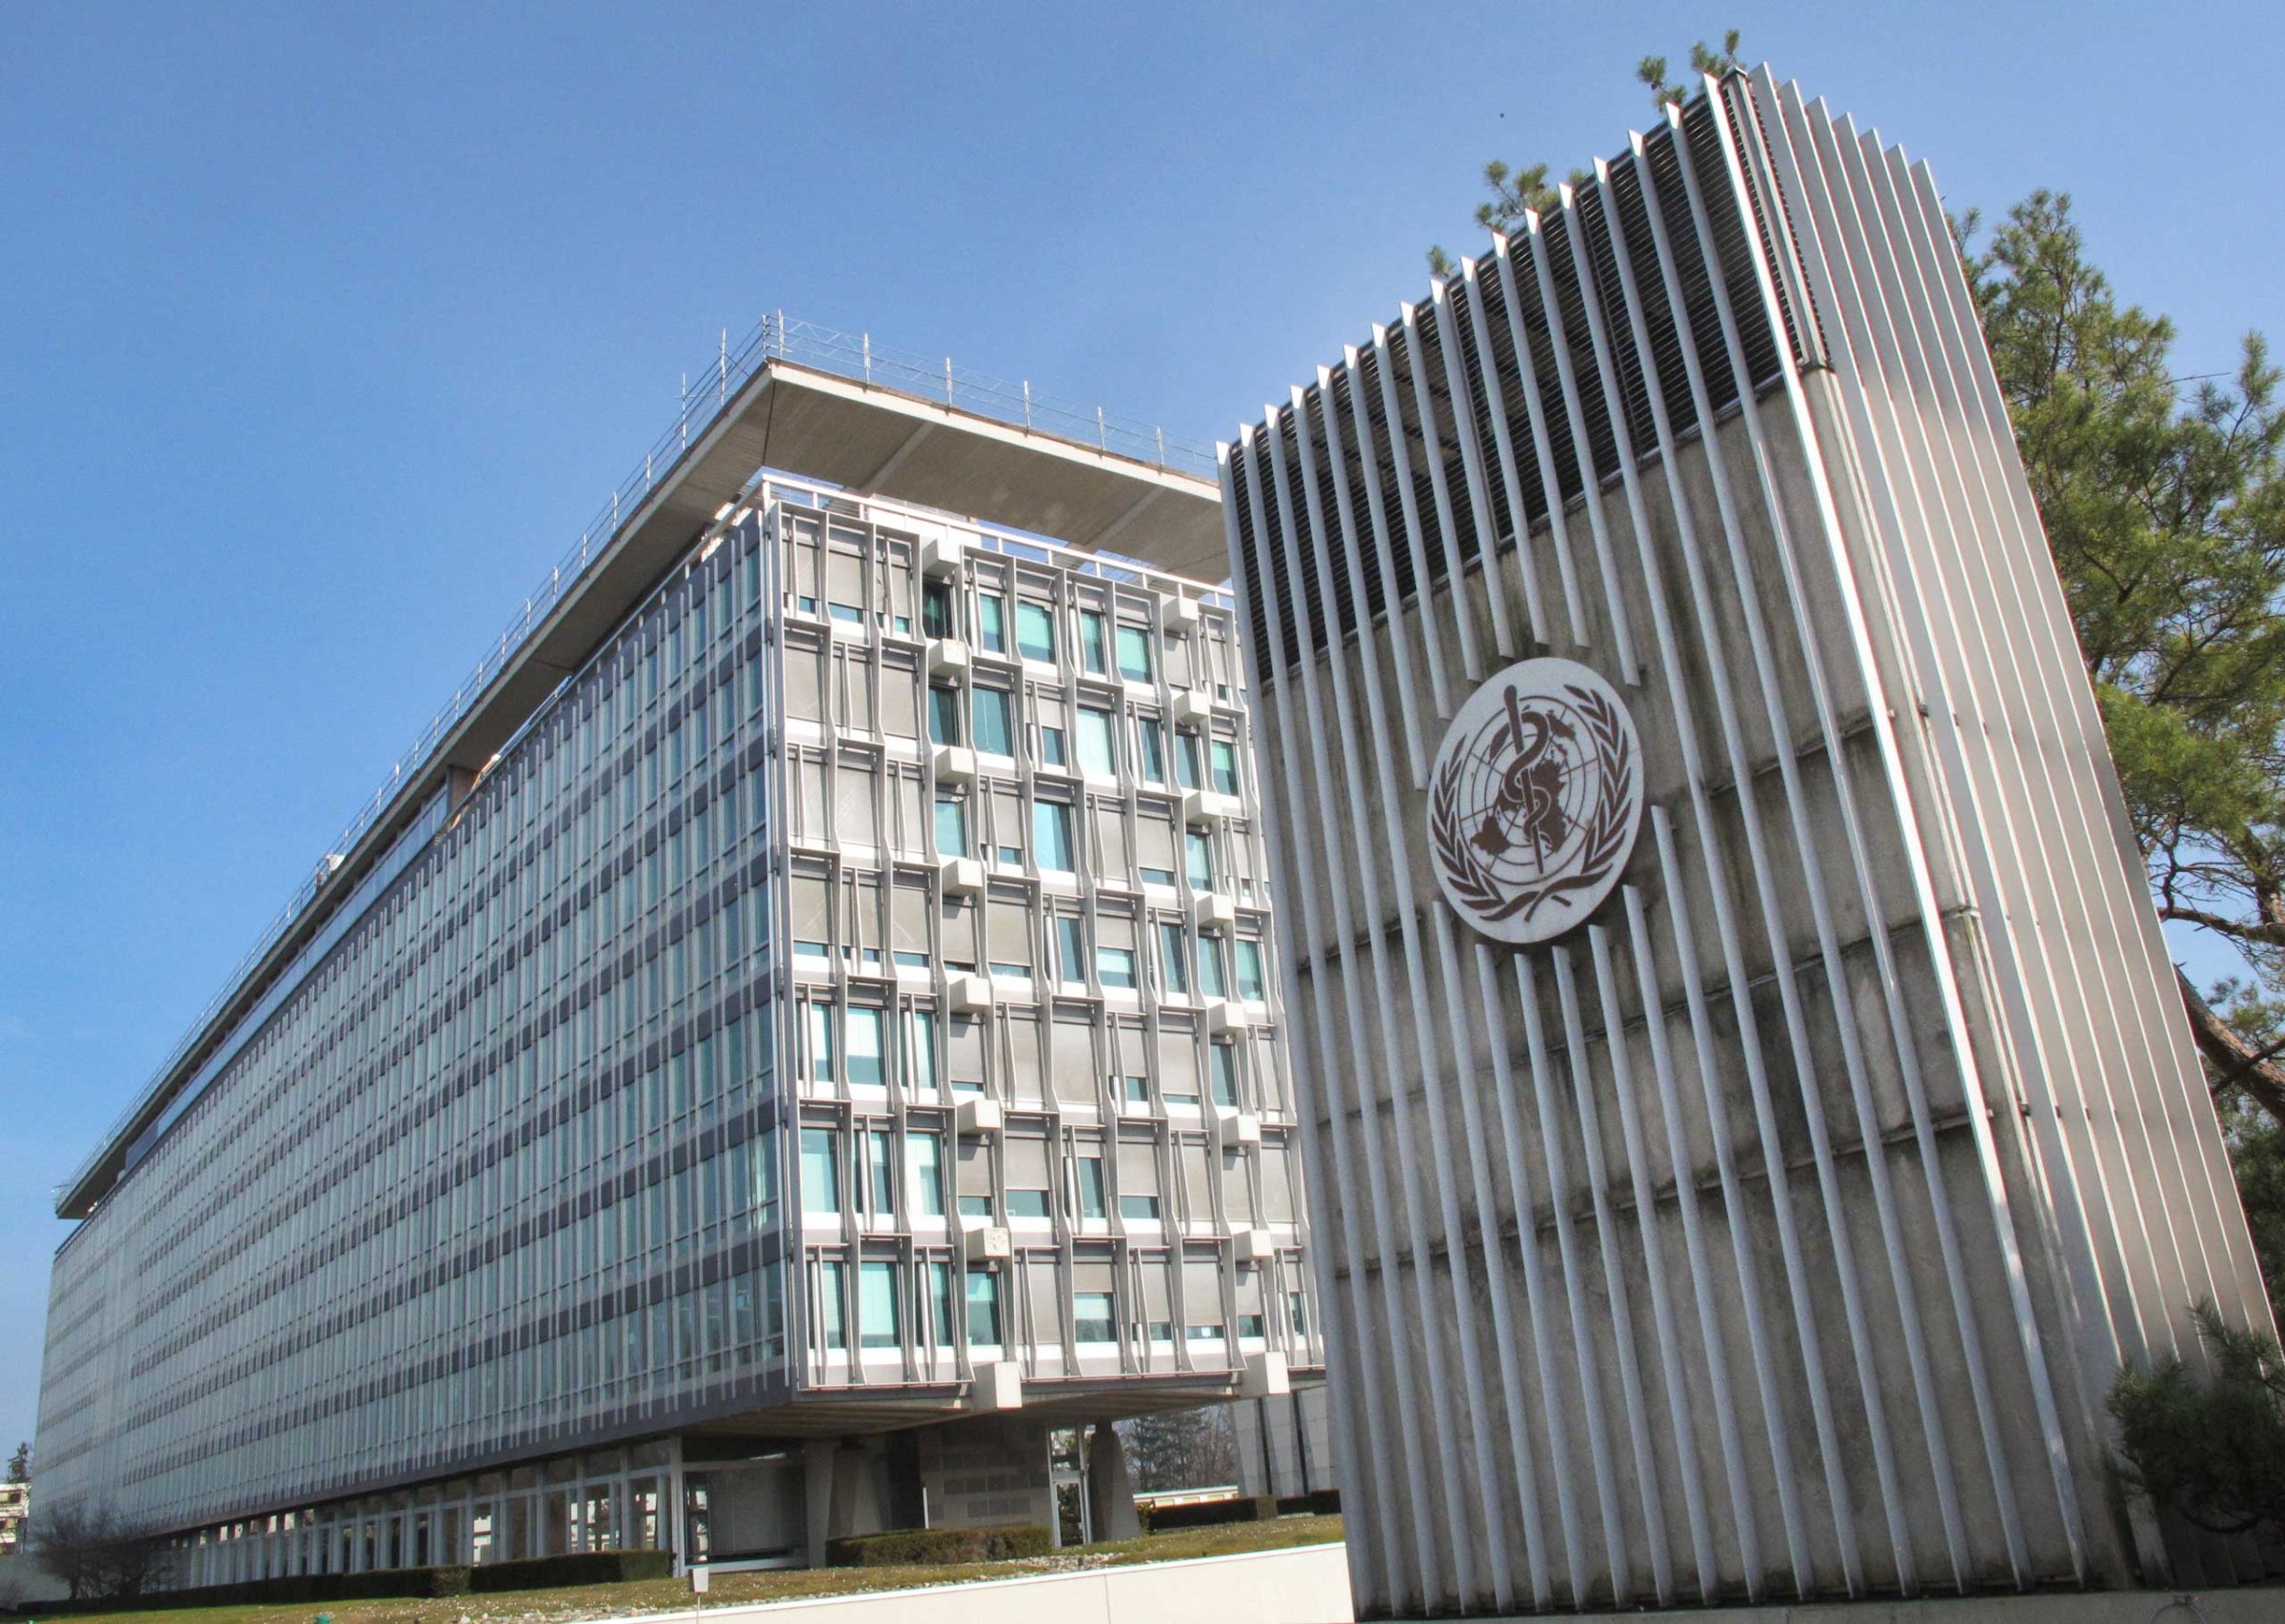 The World Health Organization (WHO) headquarters building in Geneva, Switzerland on Wednesday, March 11, 2015 .